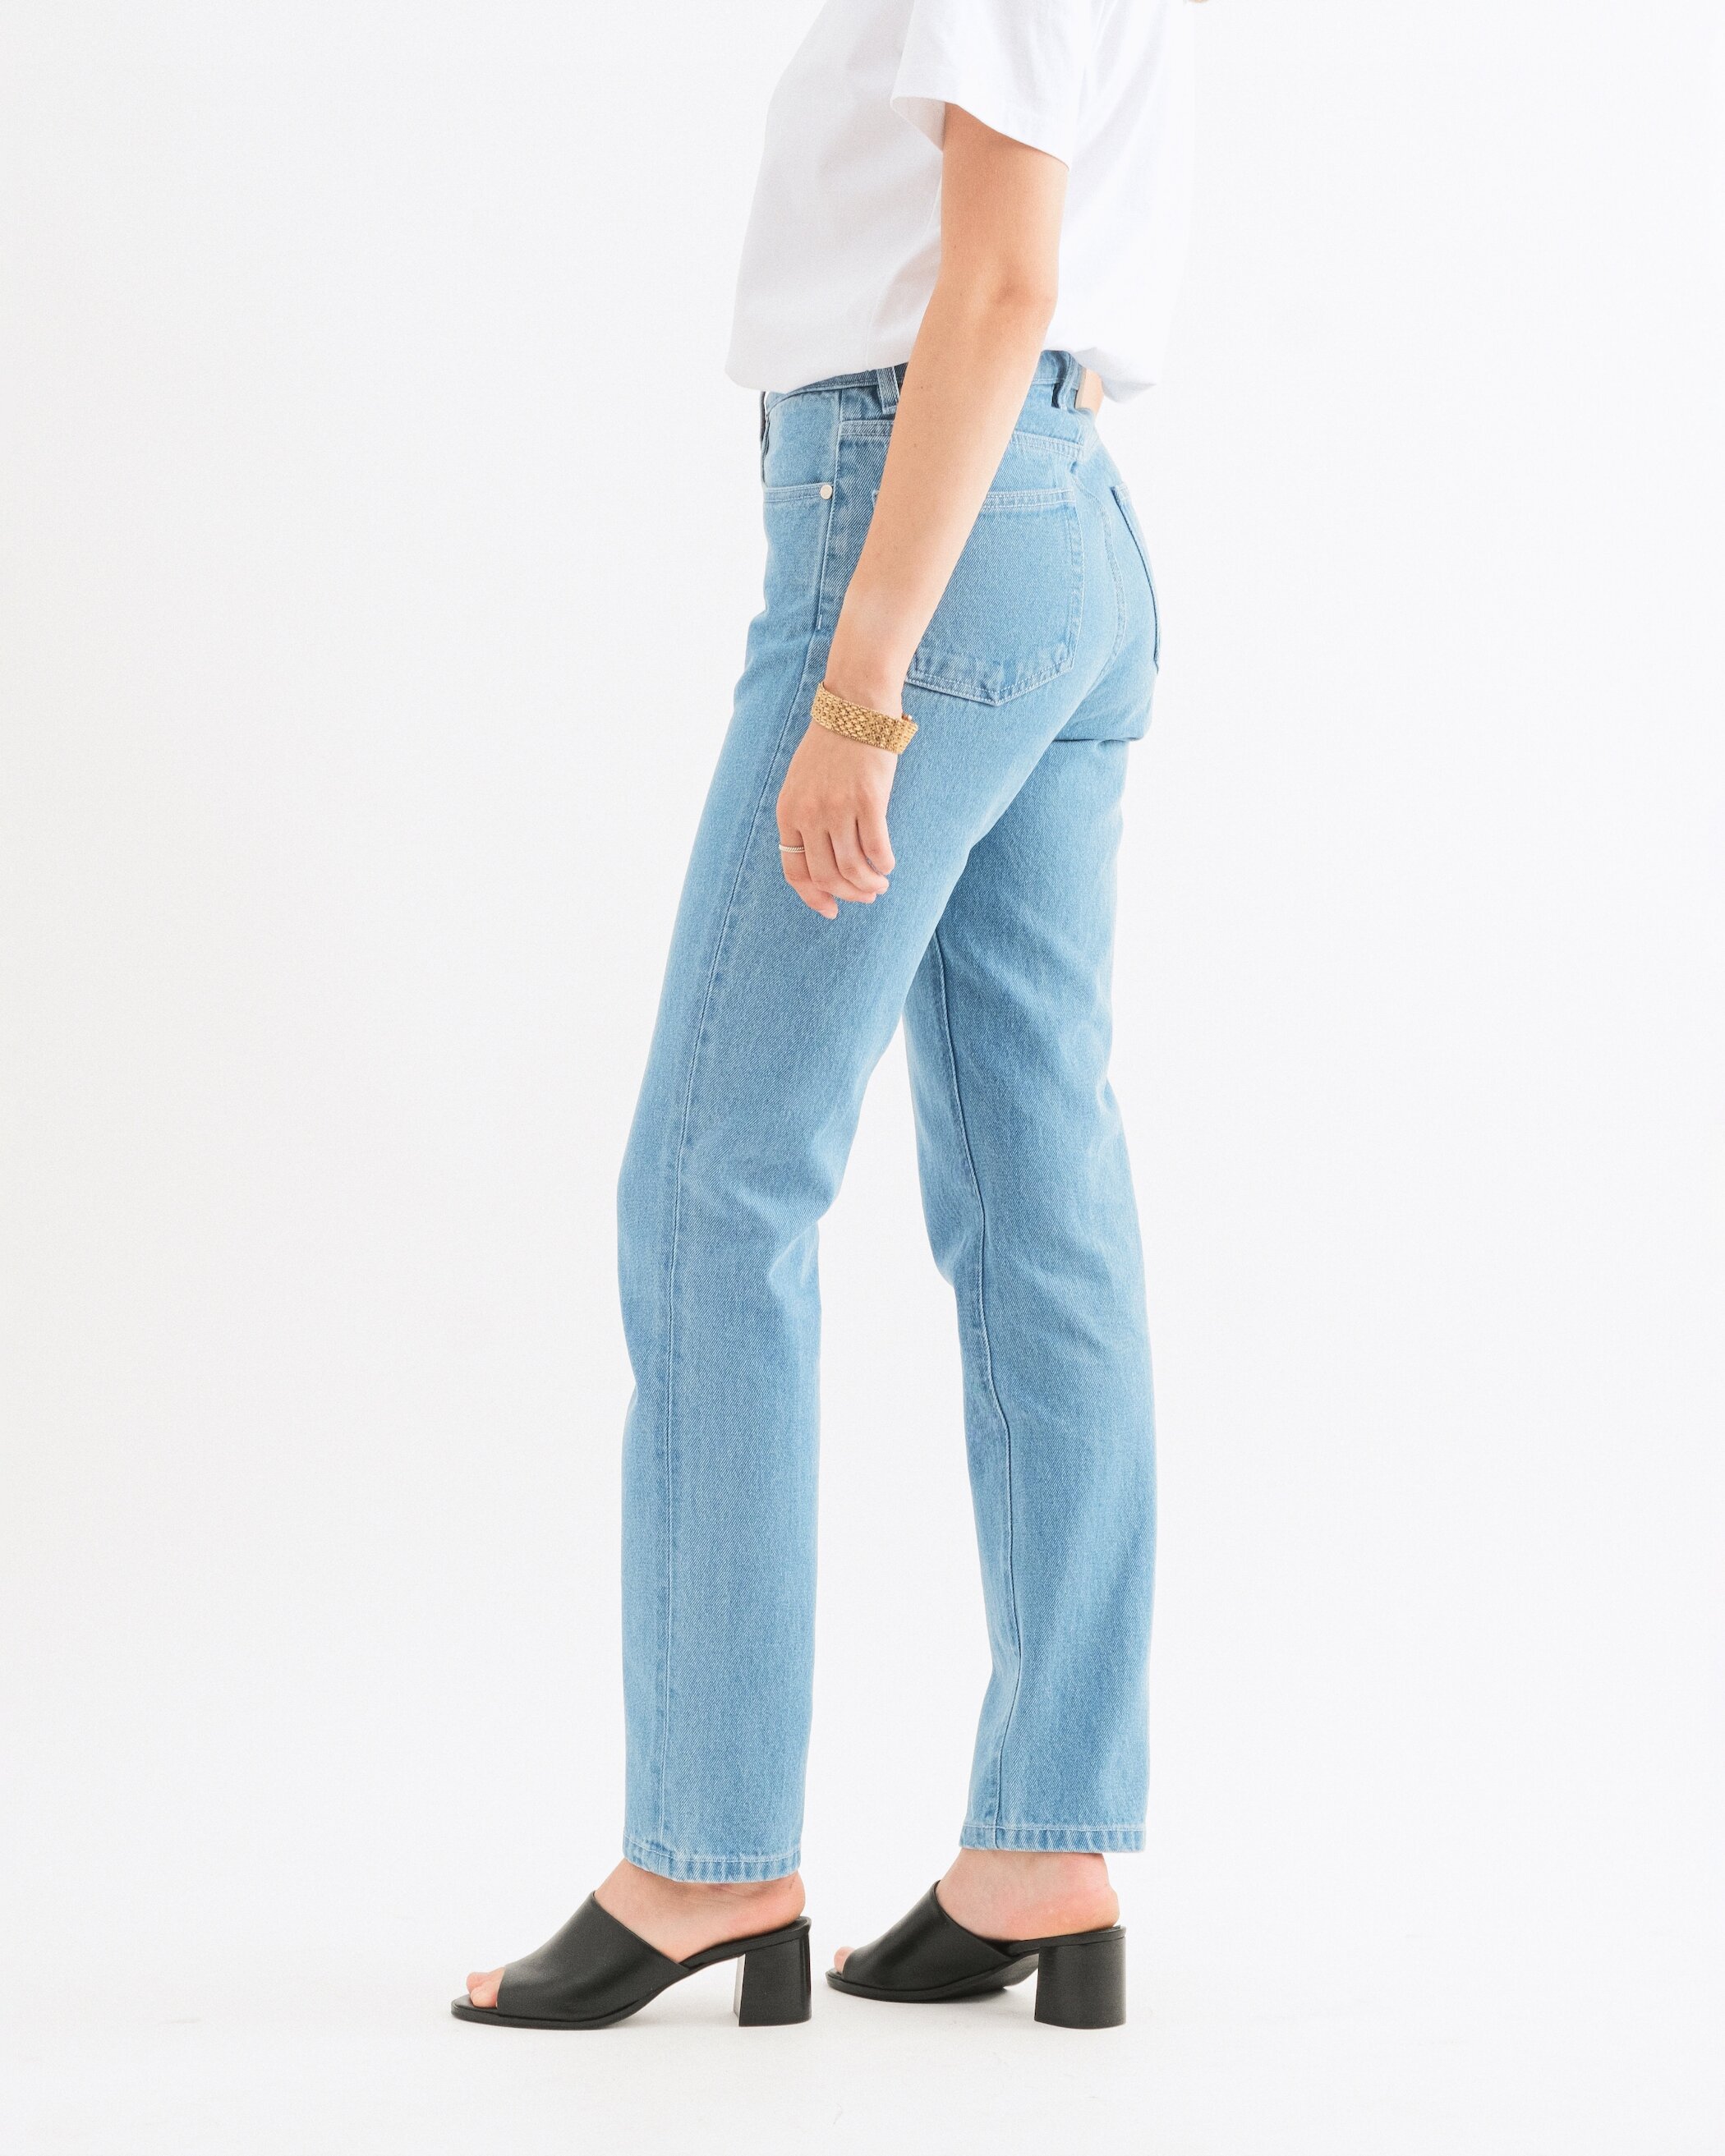 Glein - Jeans Women